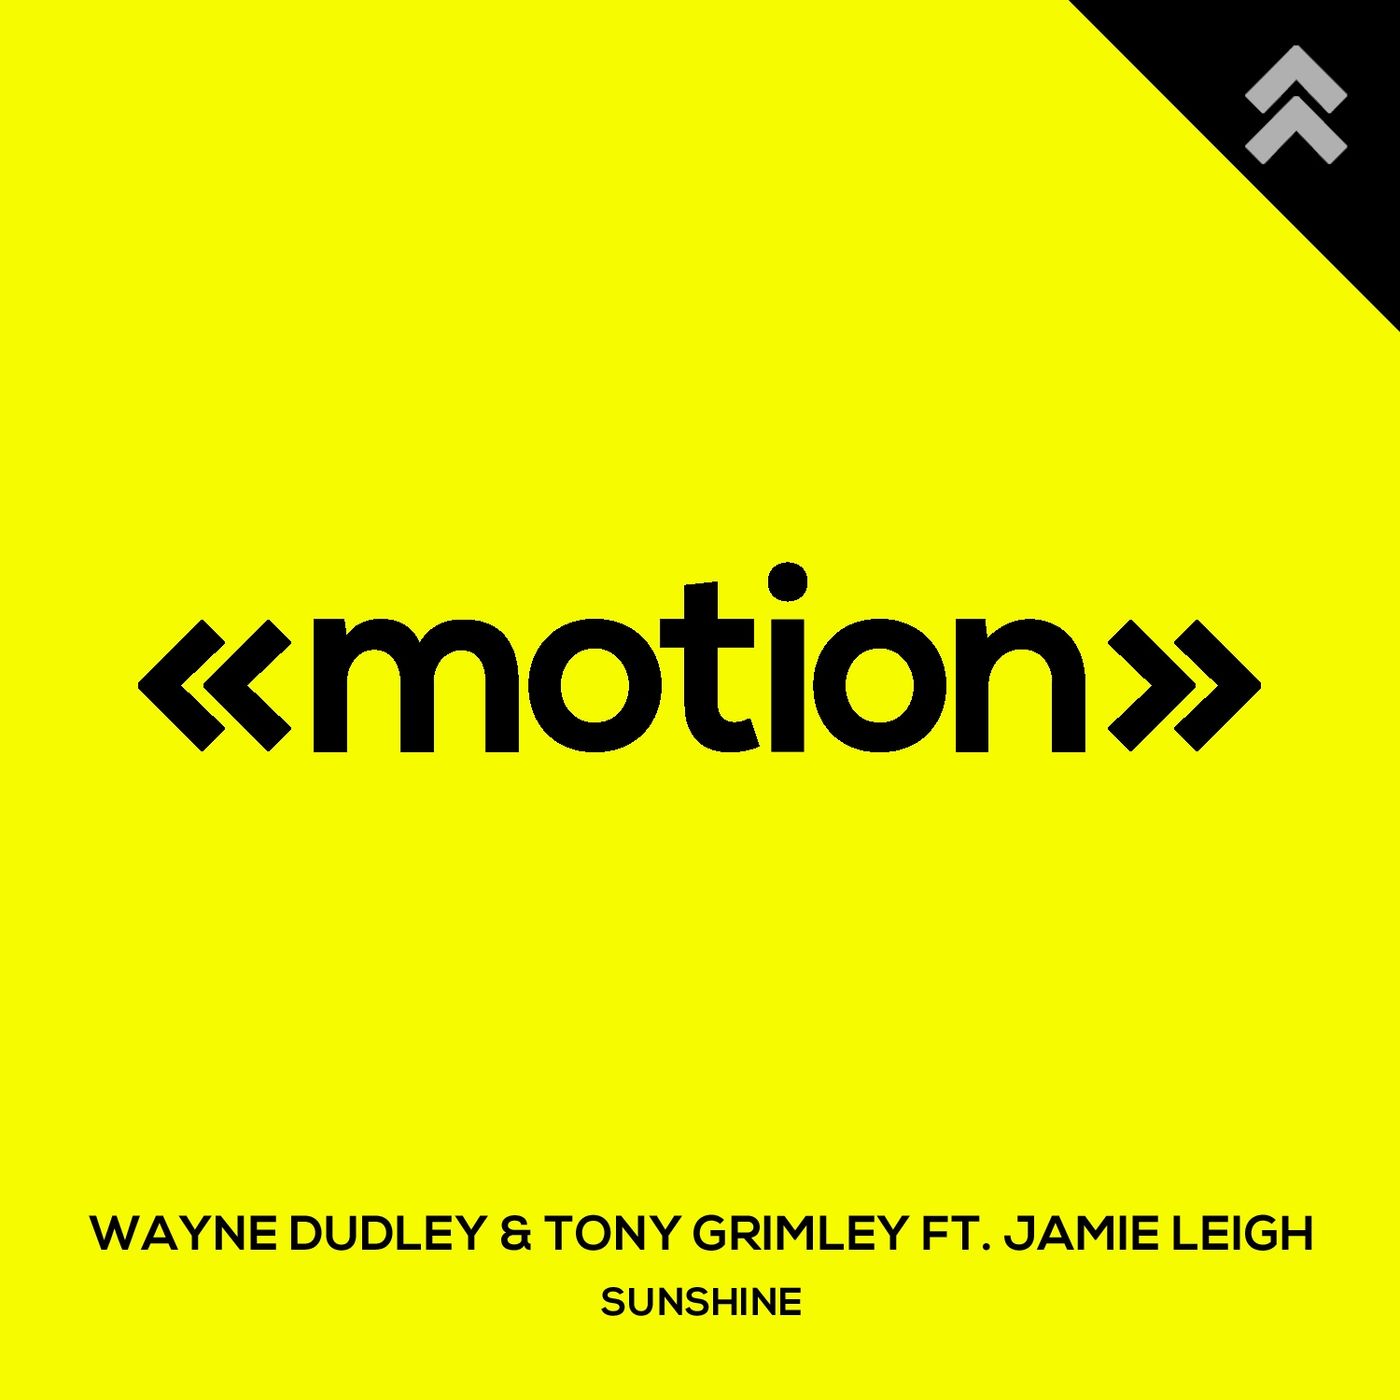 Wayne Dudley & Tony Grimley ft Jamie Leigh - Sunshine / motion